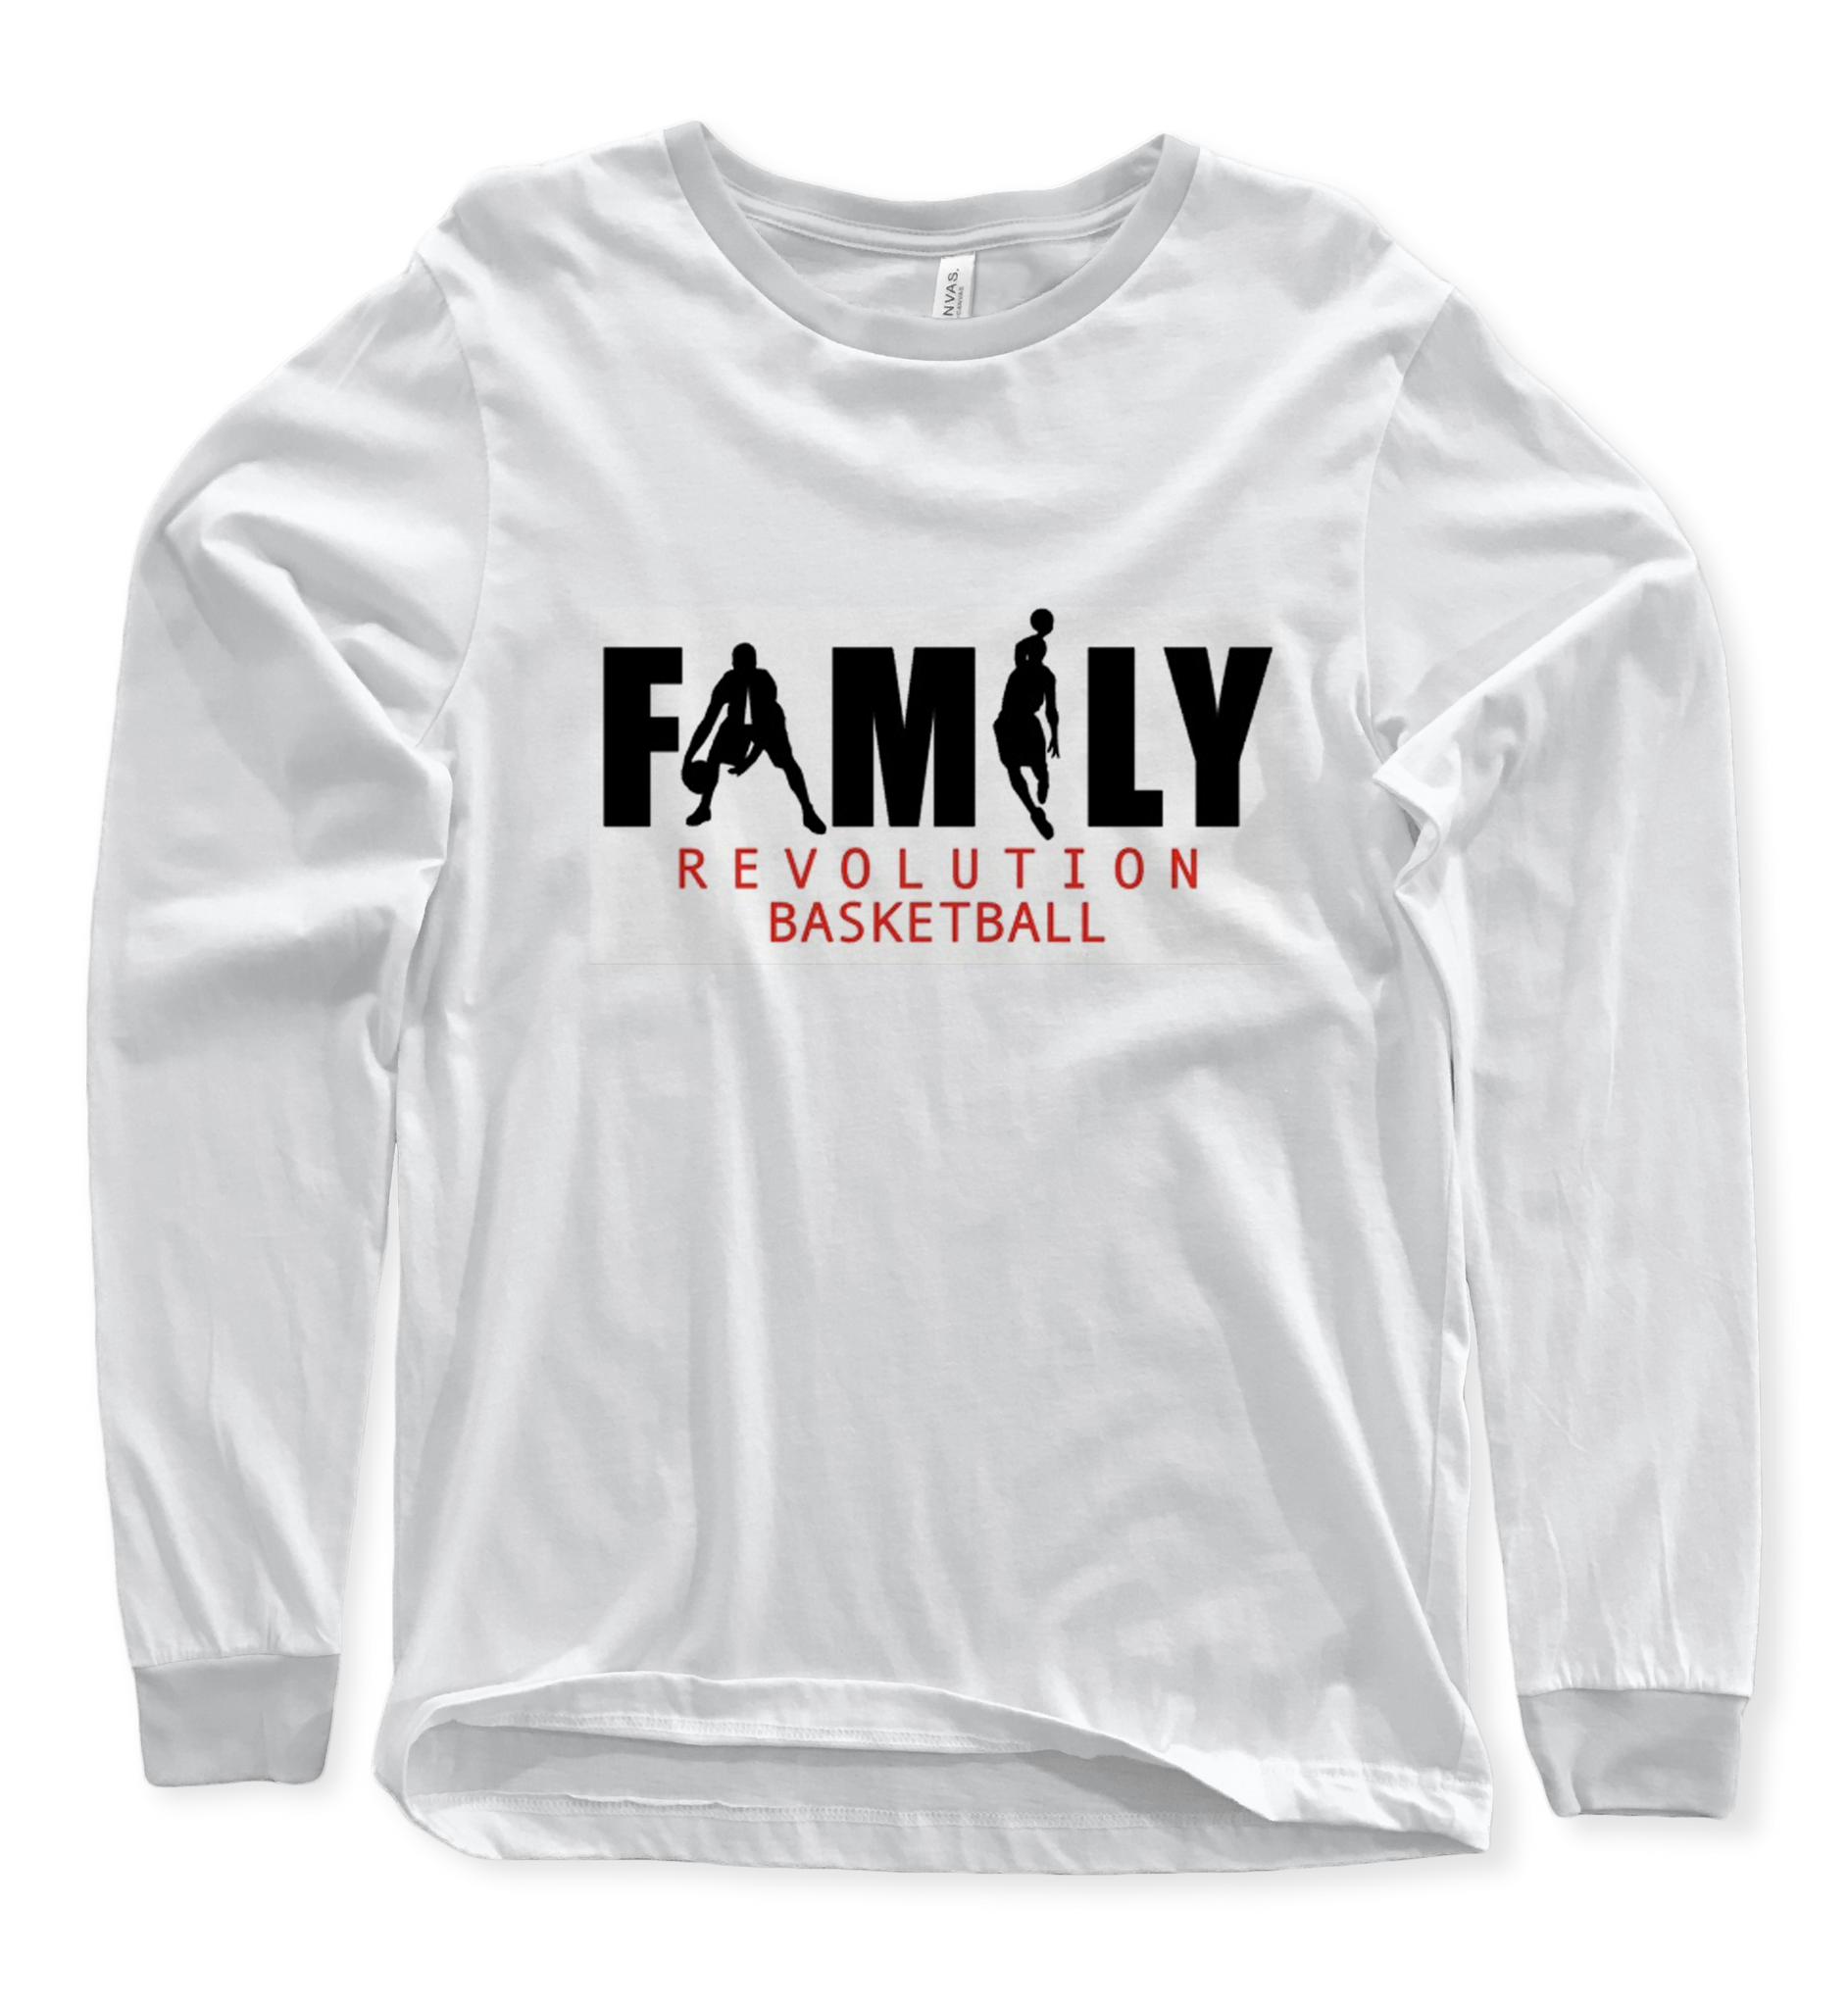 Prints Revolution Basketball Long-Sleeve Revolution Shirts – Family VT